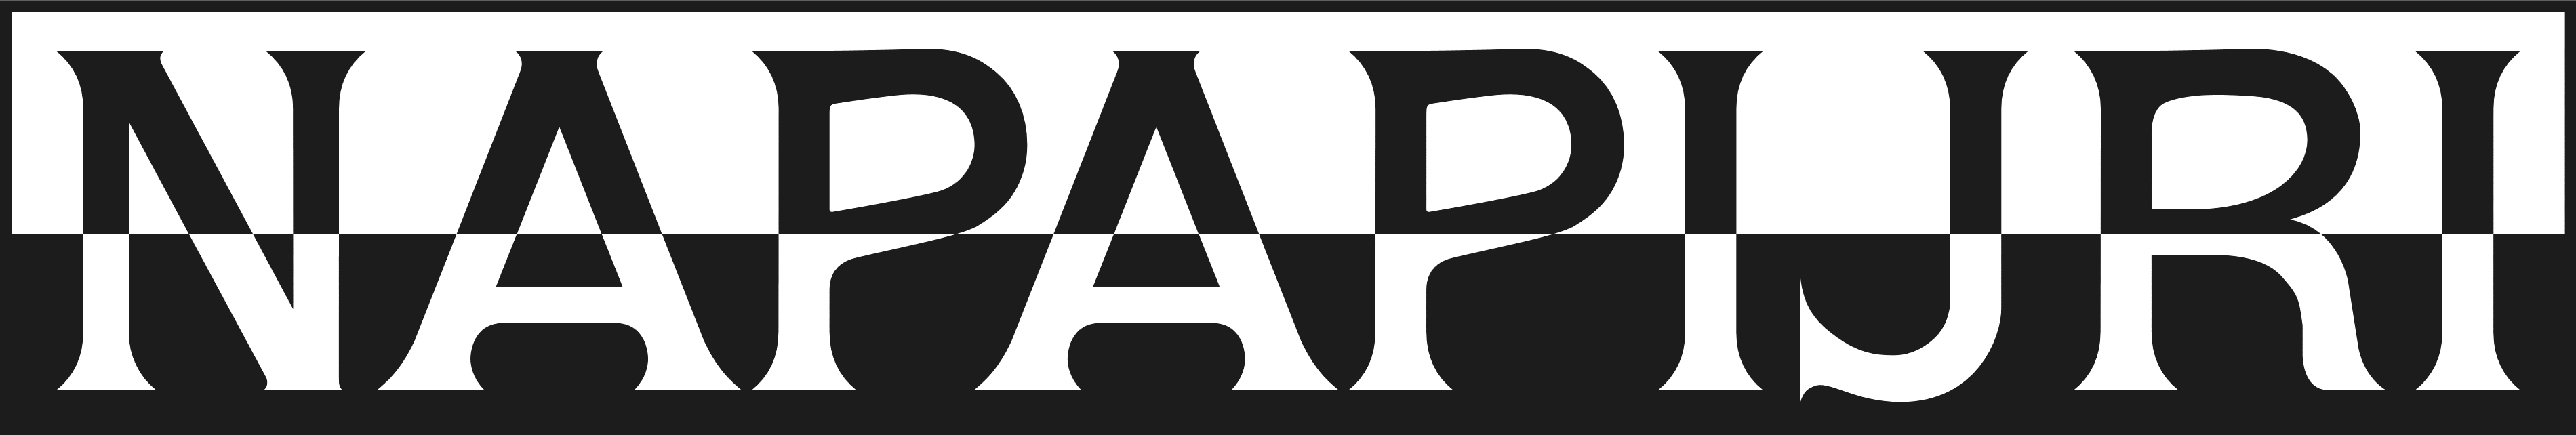 Napapijri logo, logotype